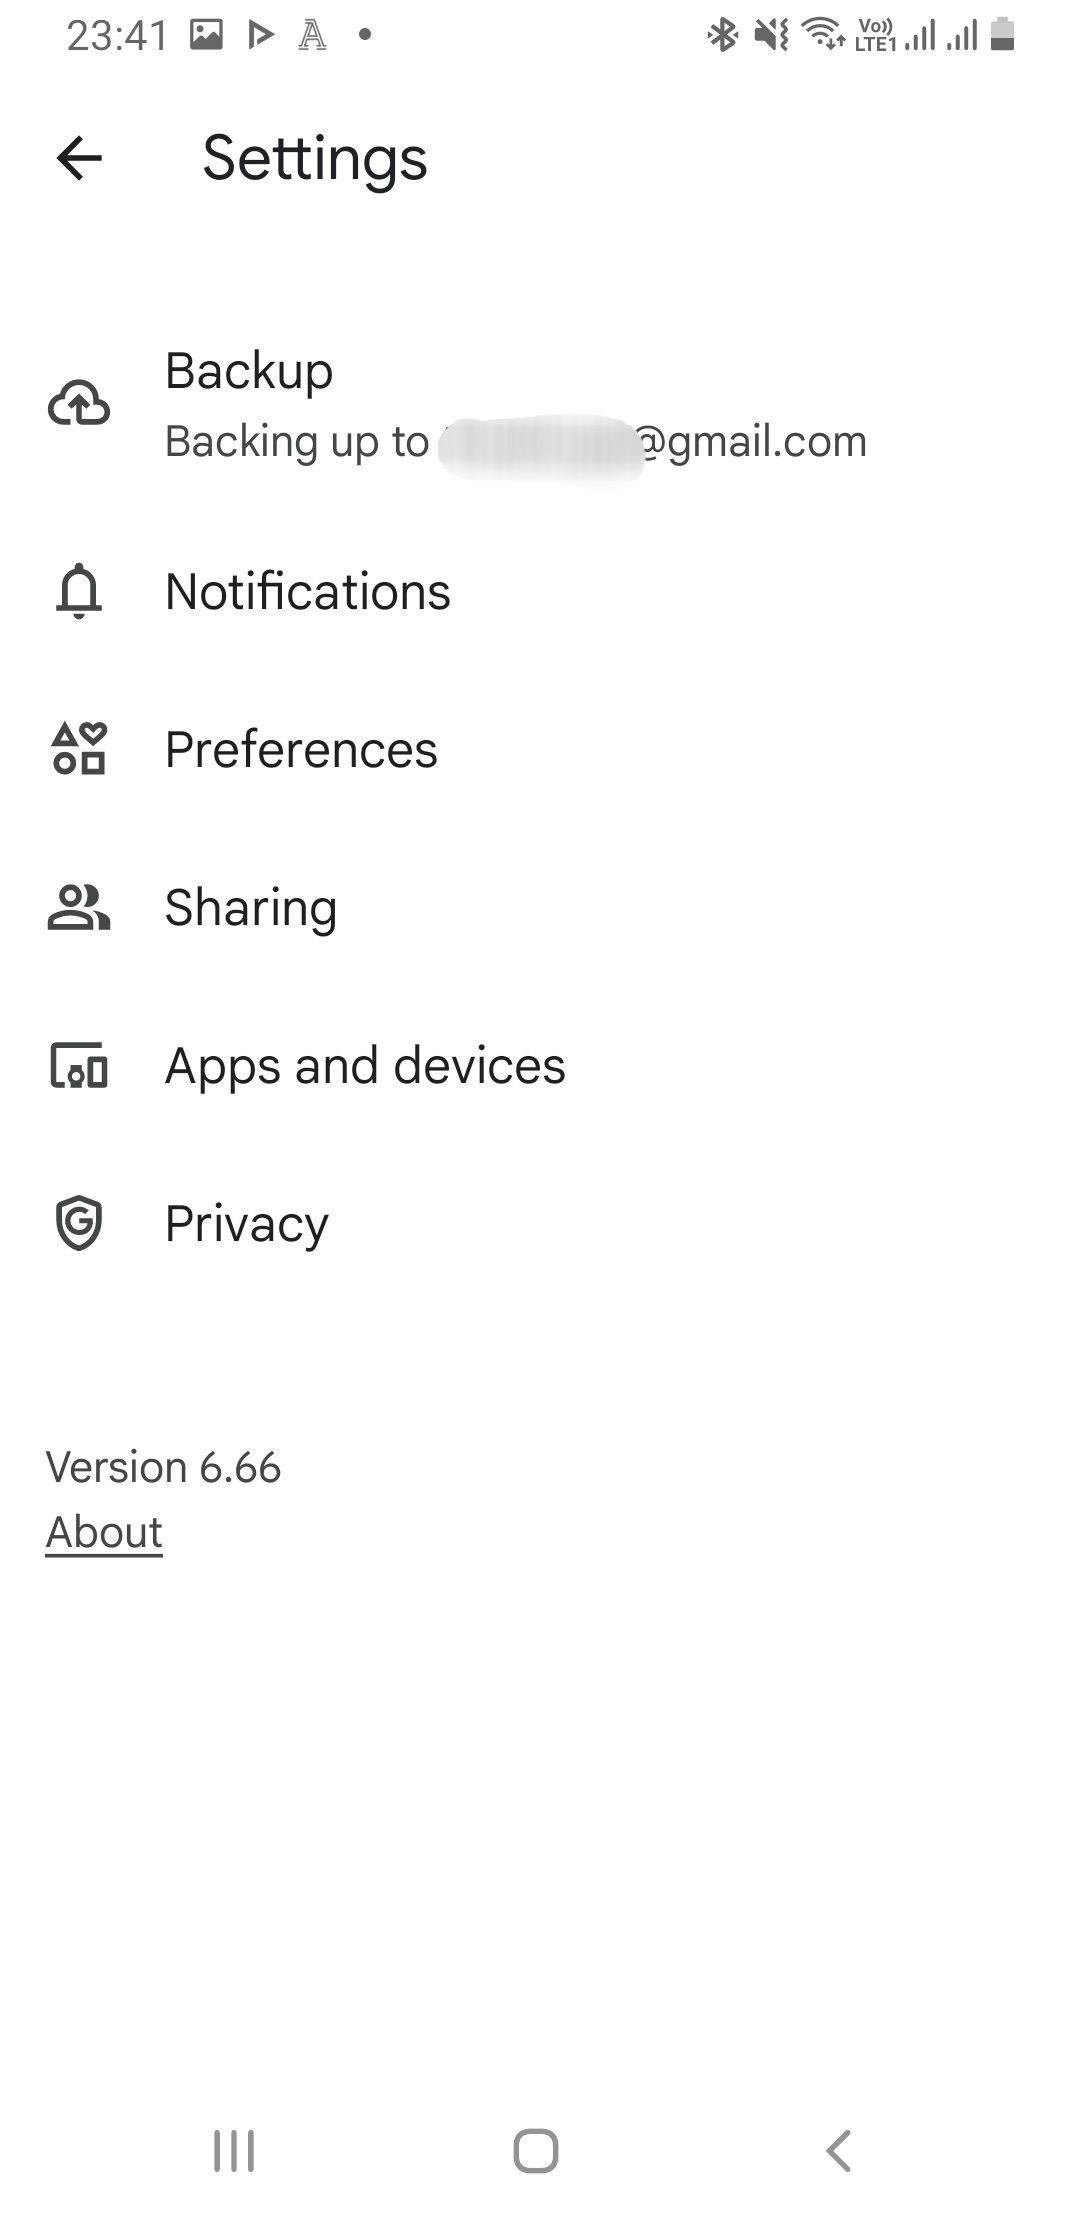 Google Photos settings menu on Android